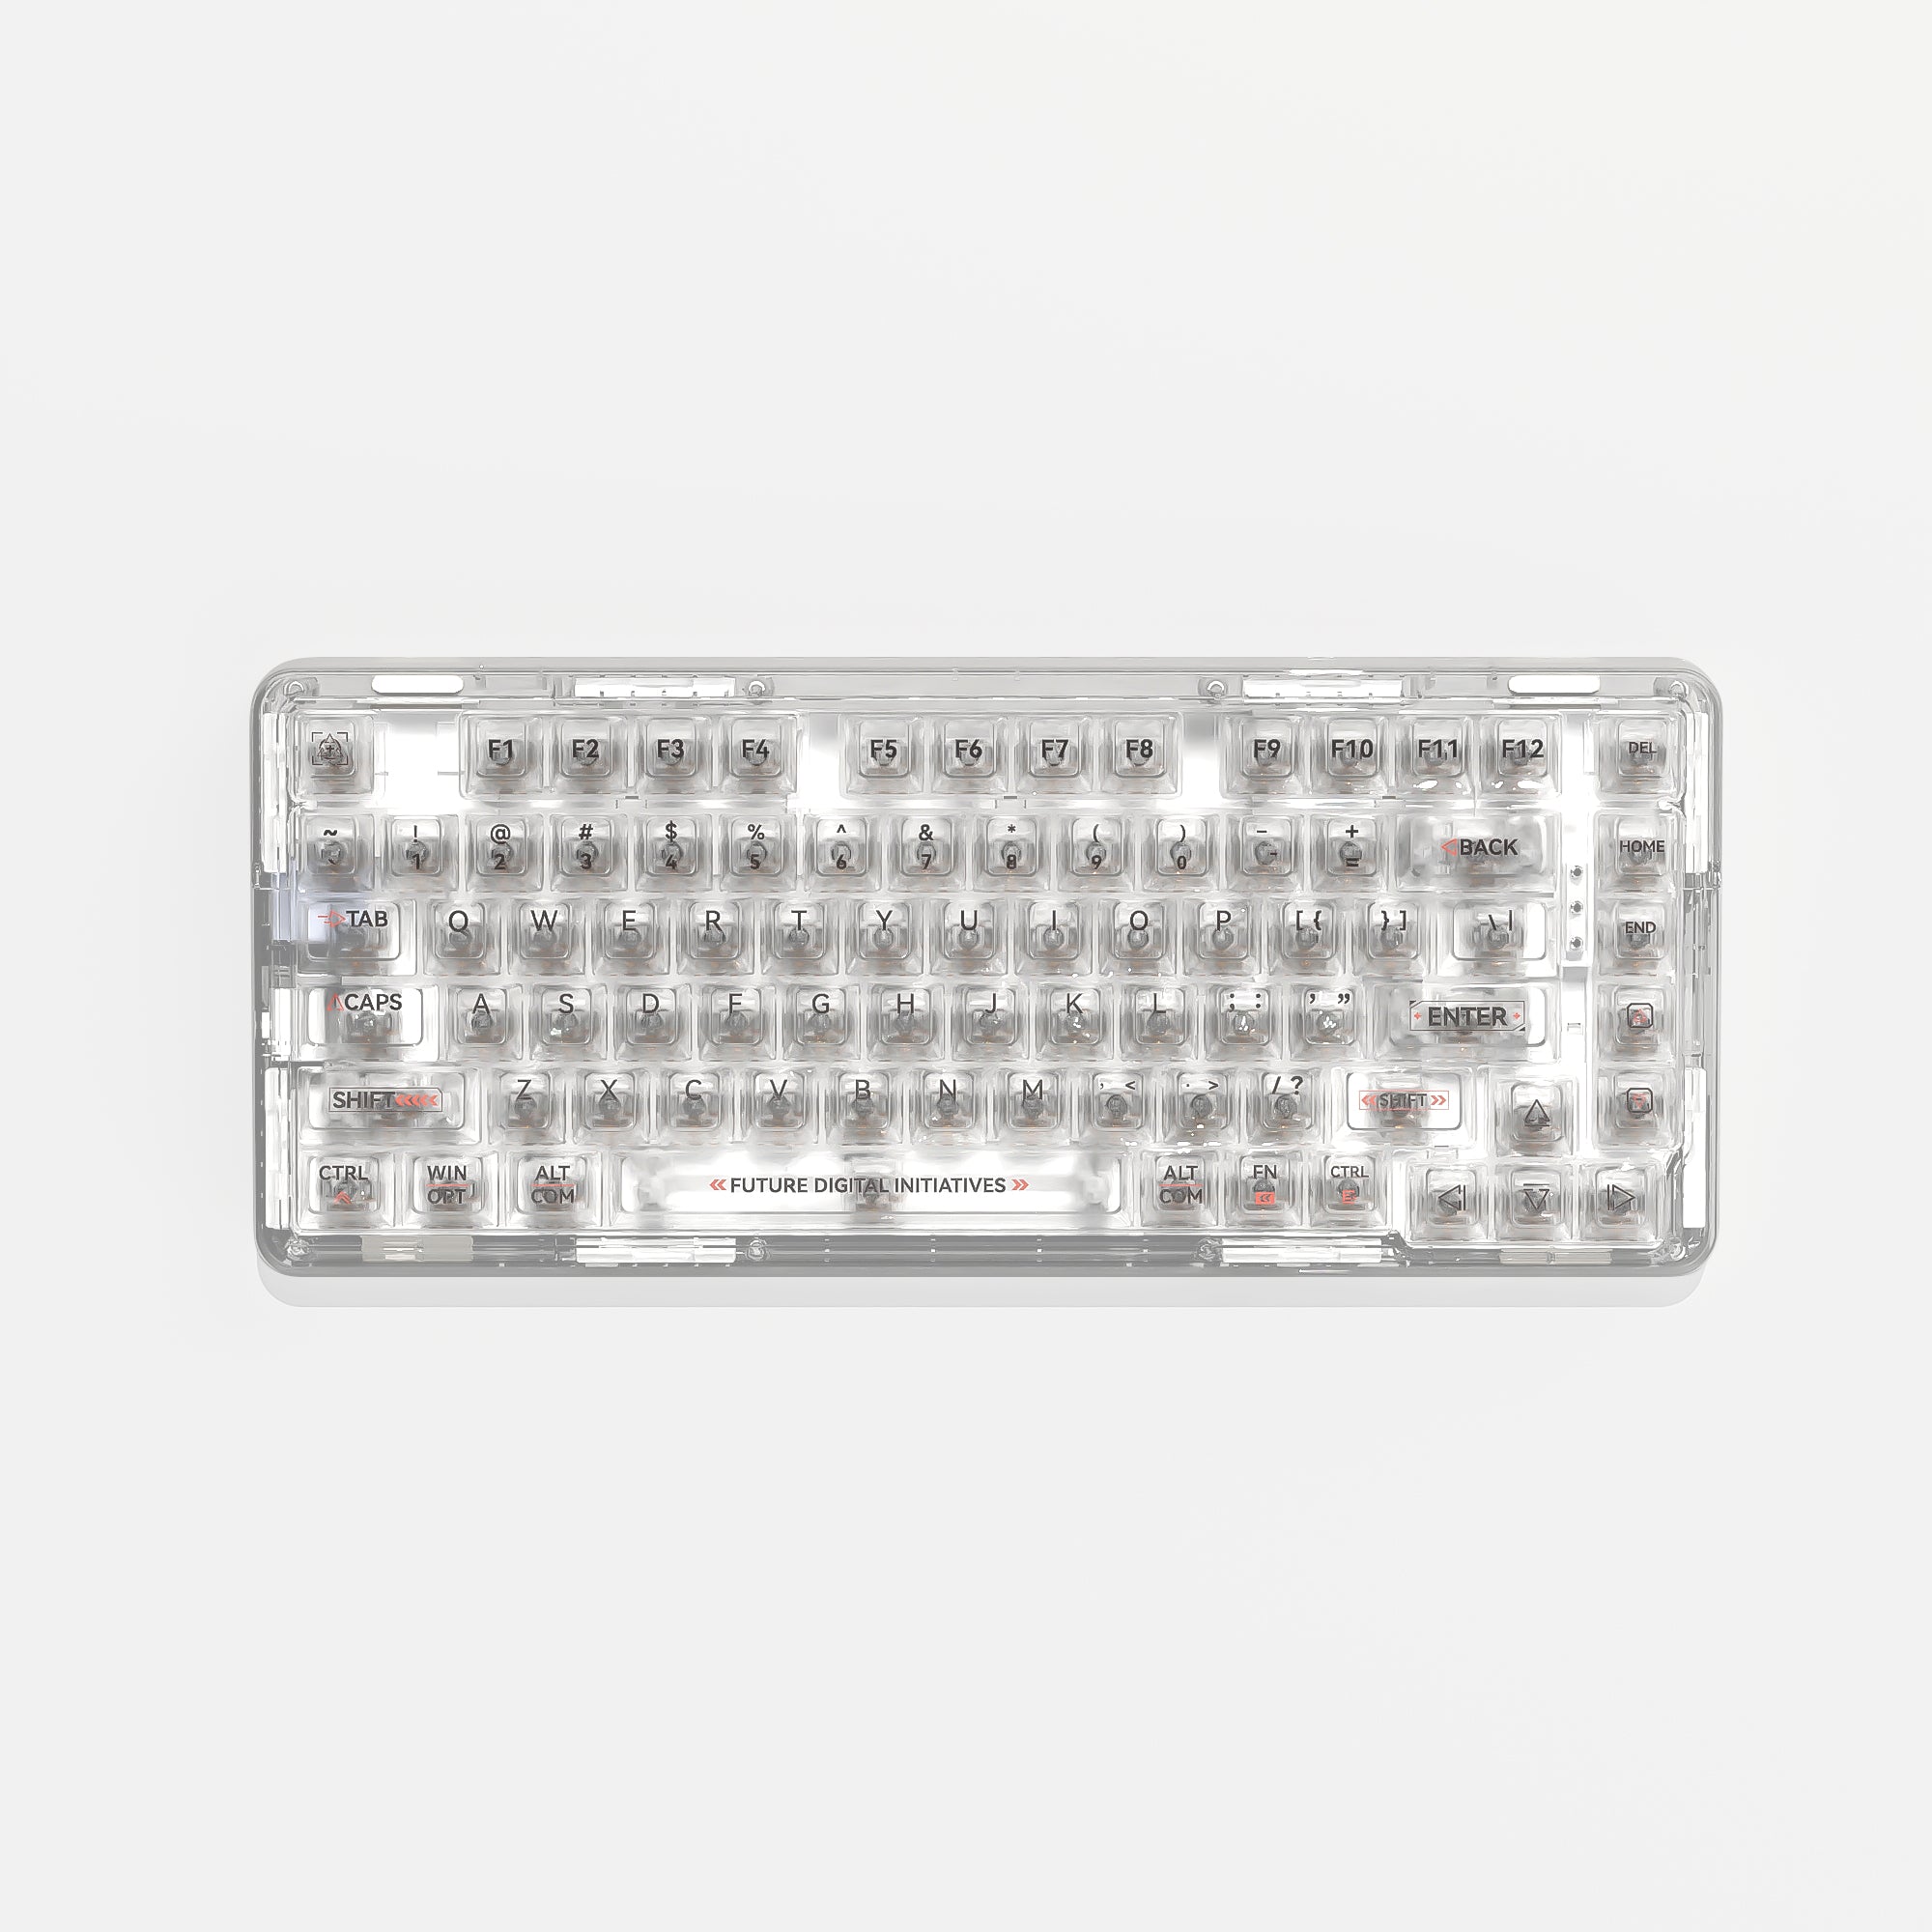 Dustsilver 82 Key D82 transparent keycap suitable for D82 keyboard